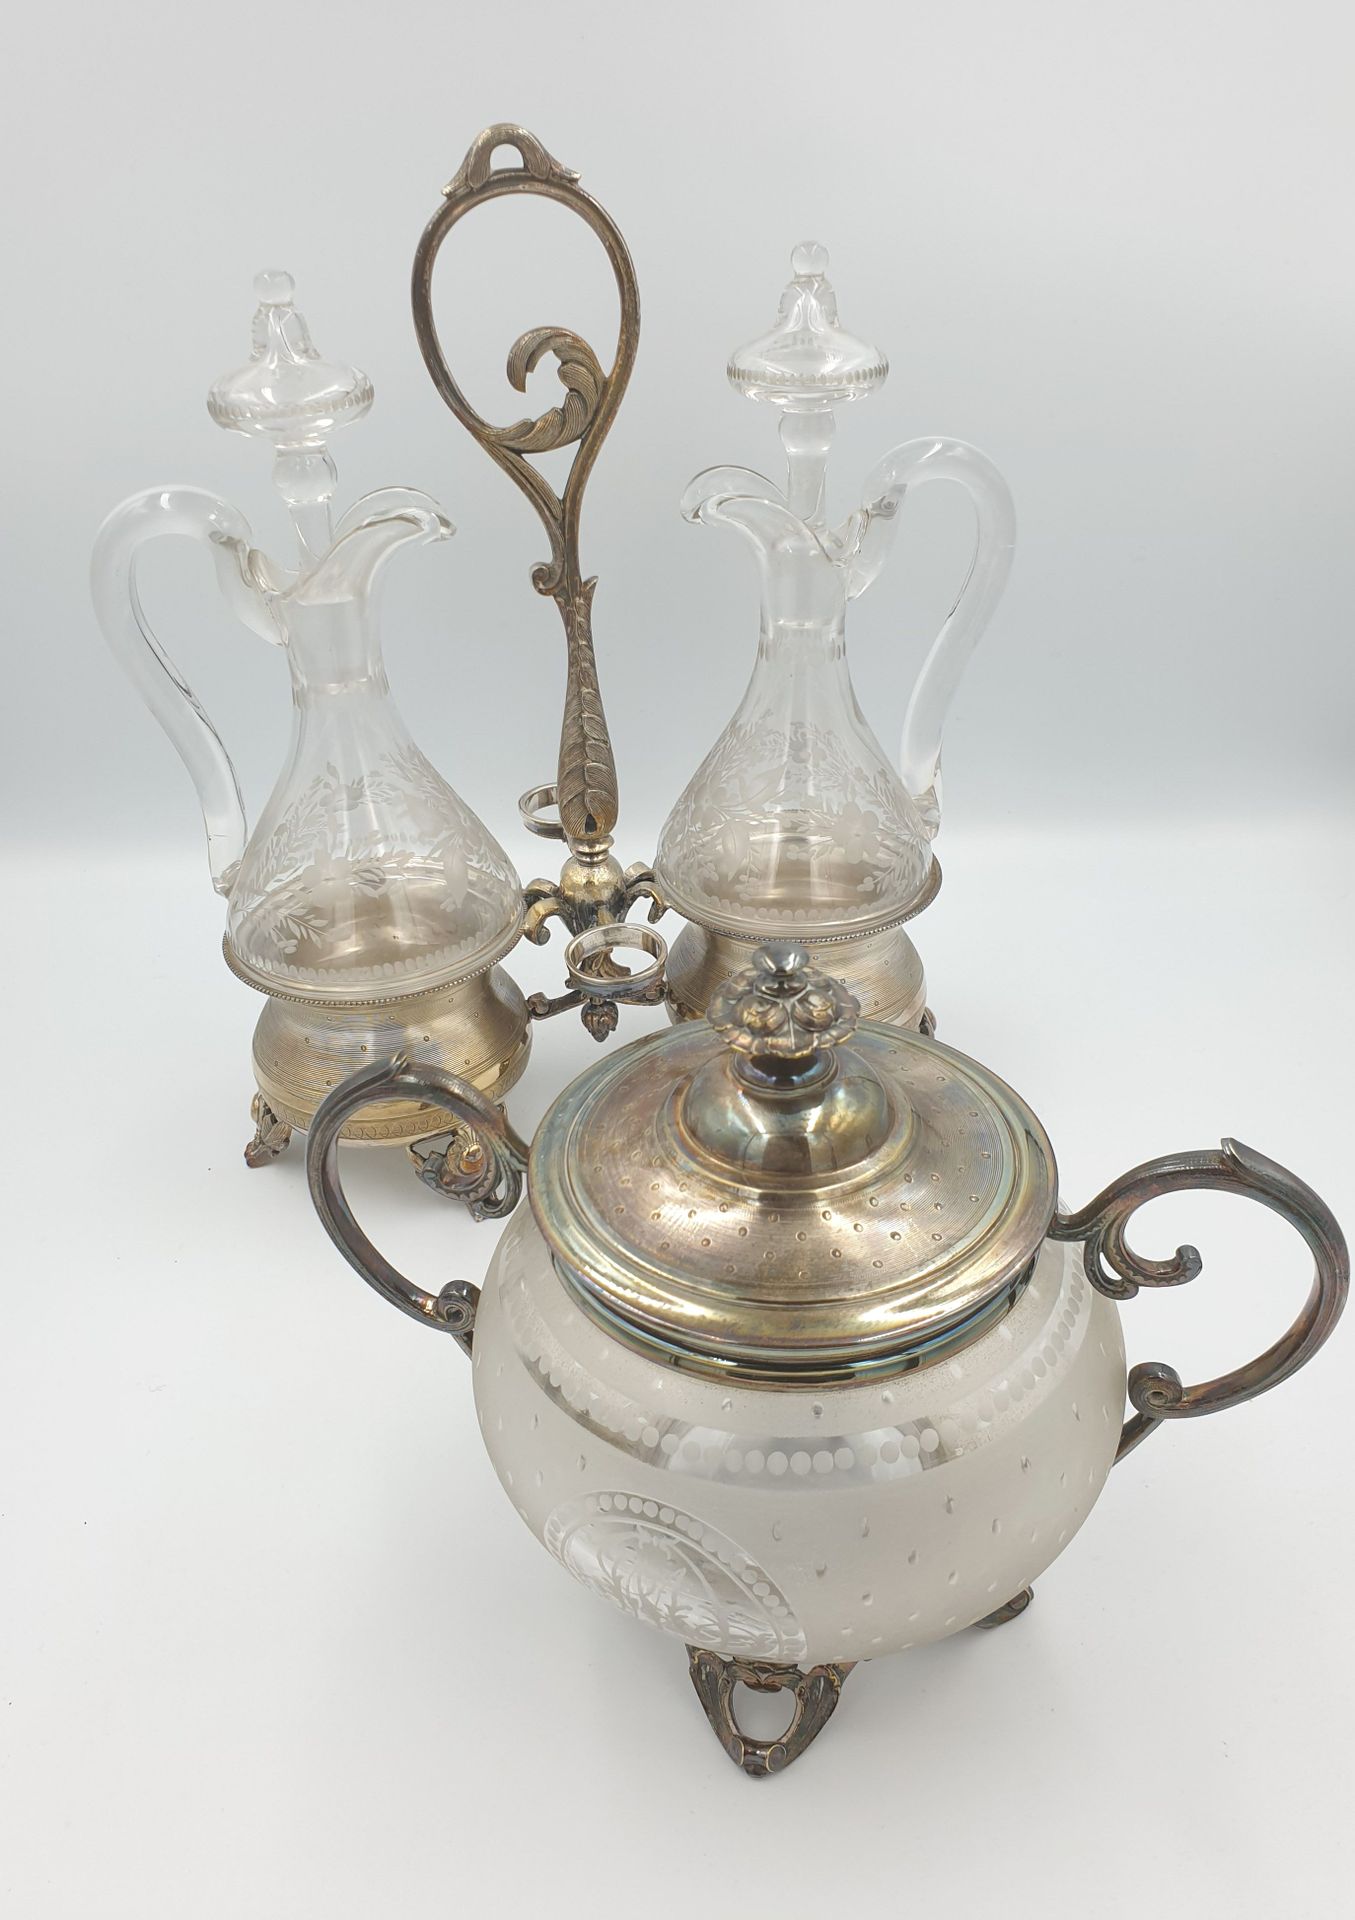 Null 镀银油和醋坩埚，雕刻的玻璃瓶和一个镀银和雕刻的玻璃盖糖碗

H.28厘米